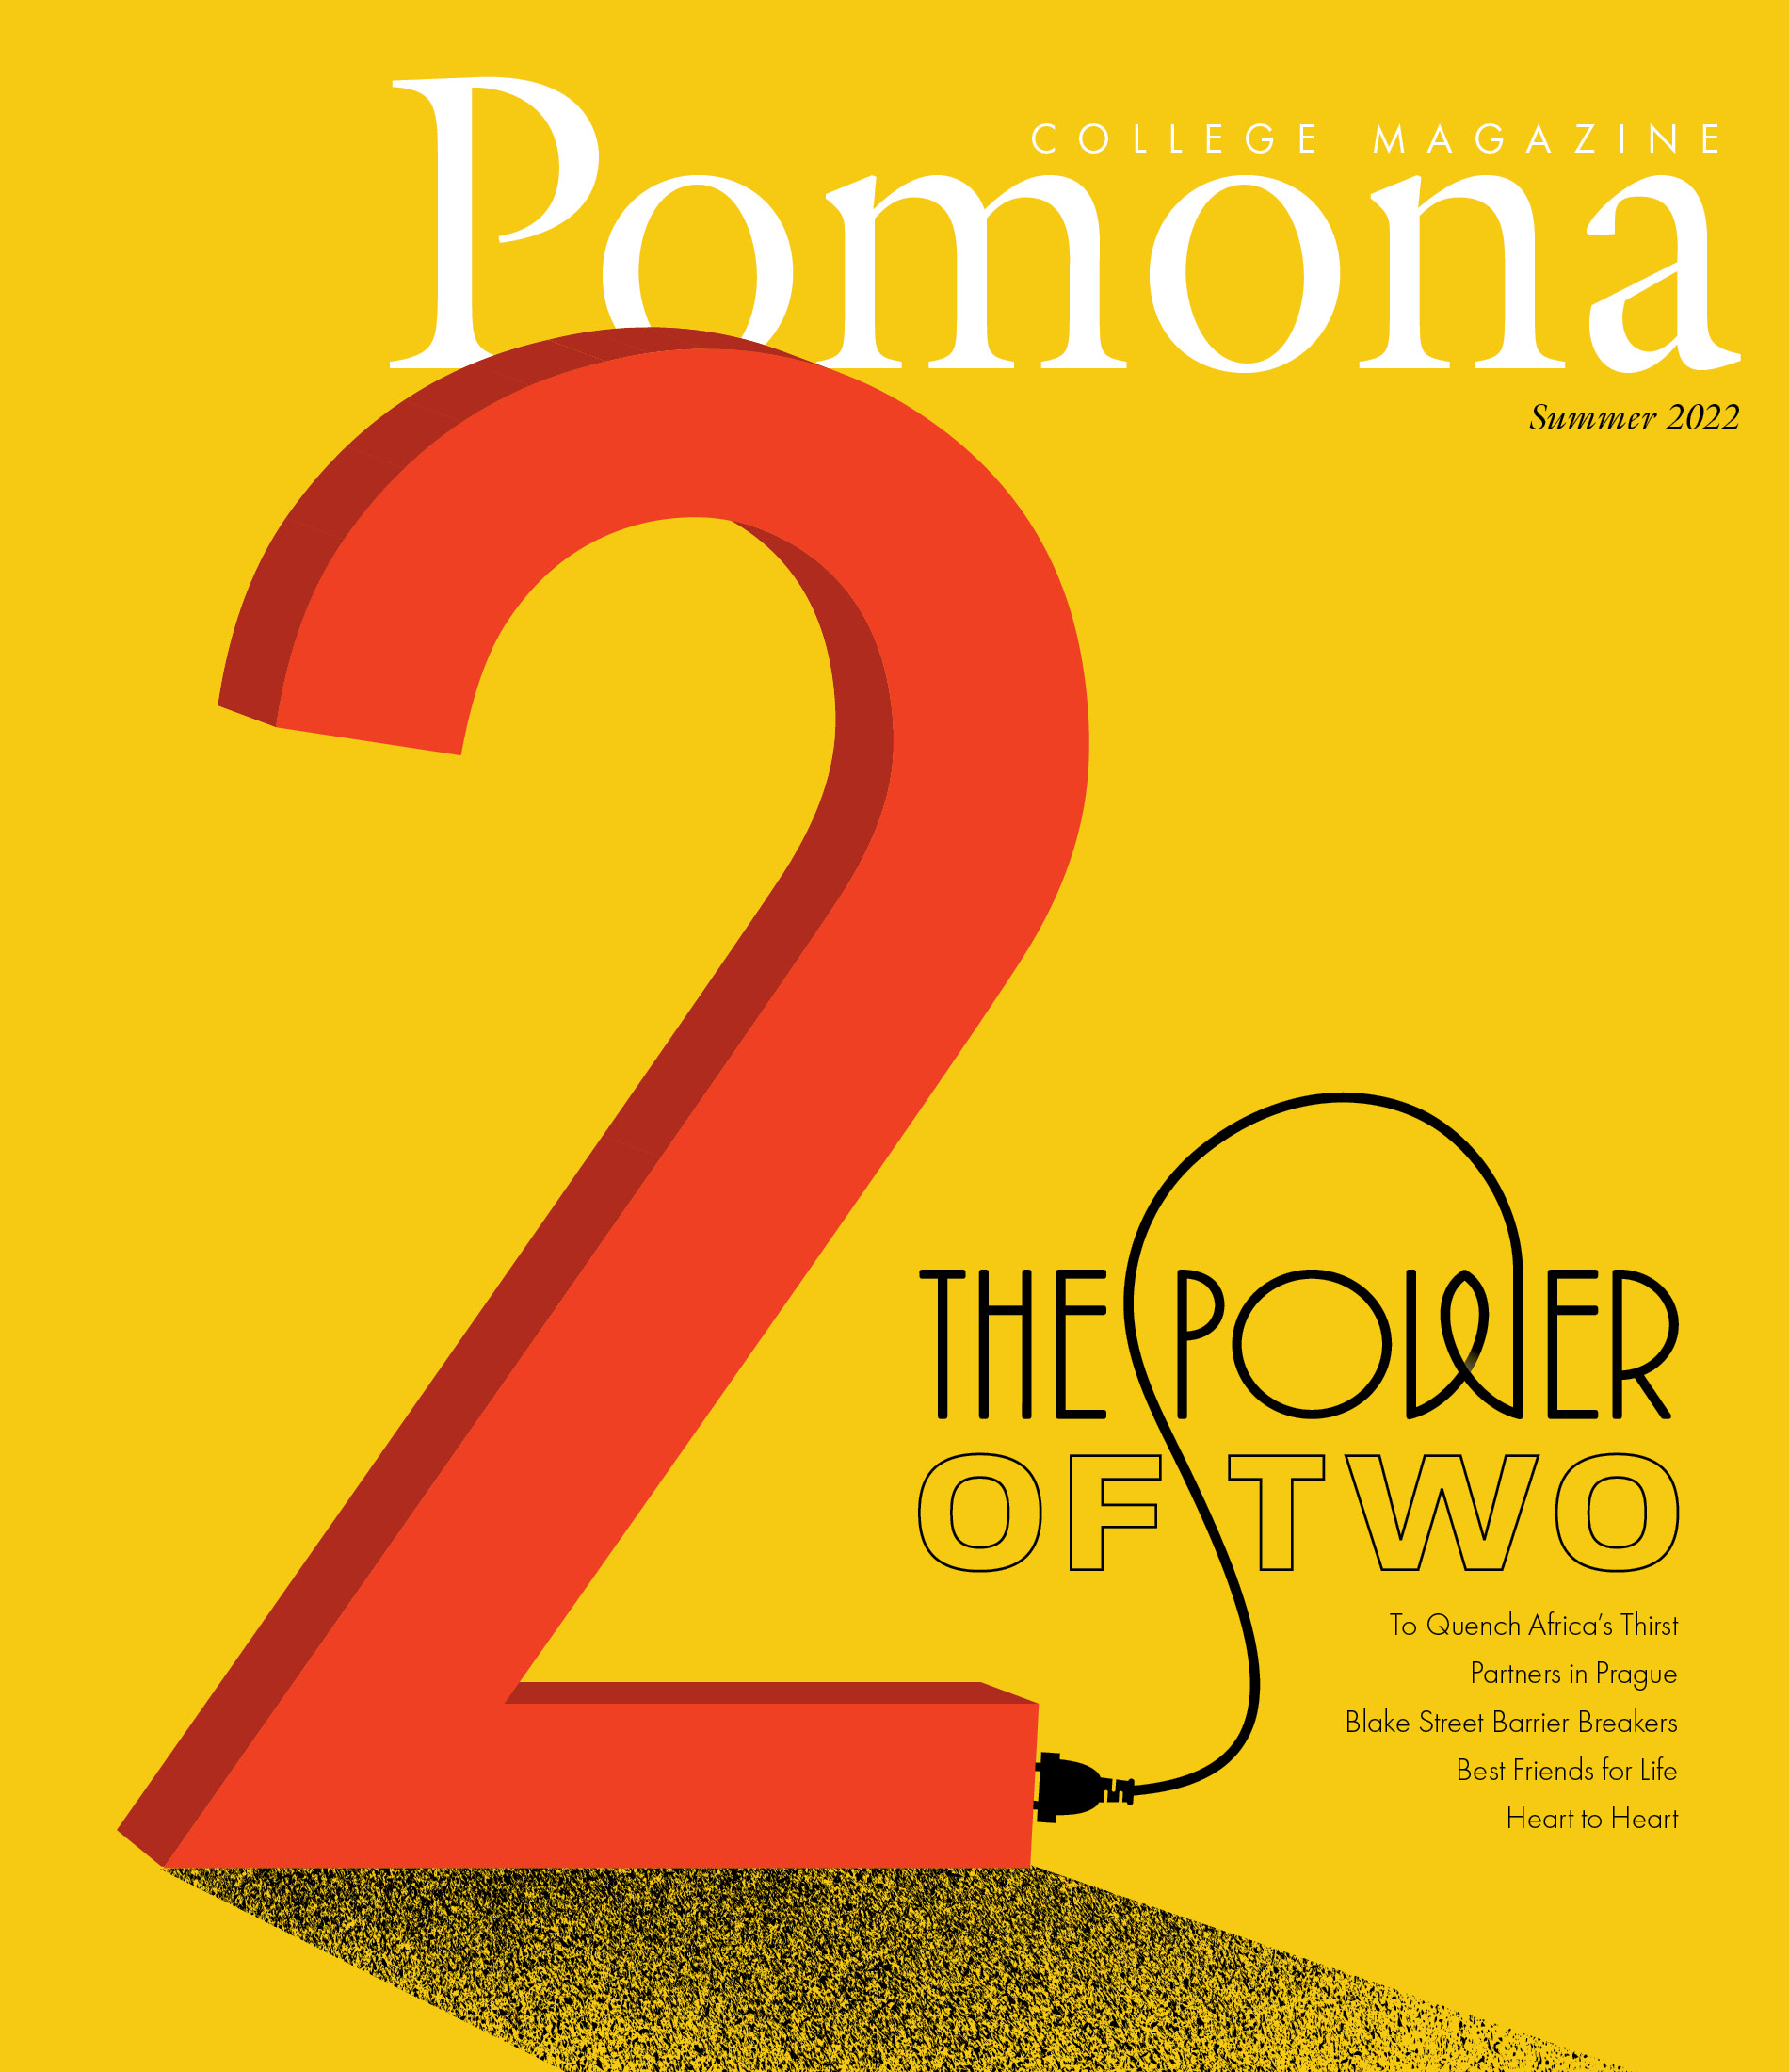 Pomona College Magazine Summer 2022